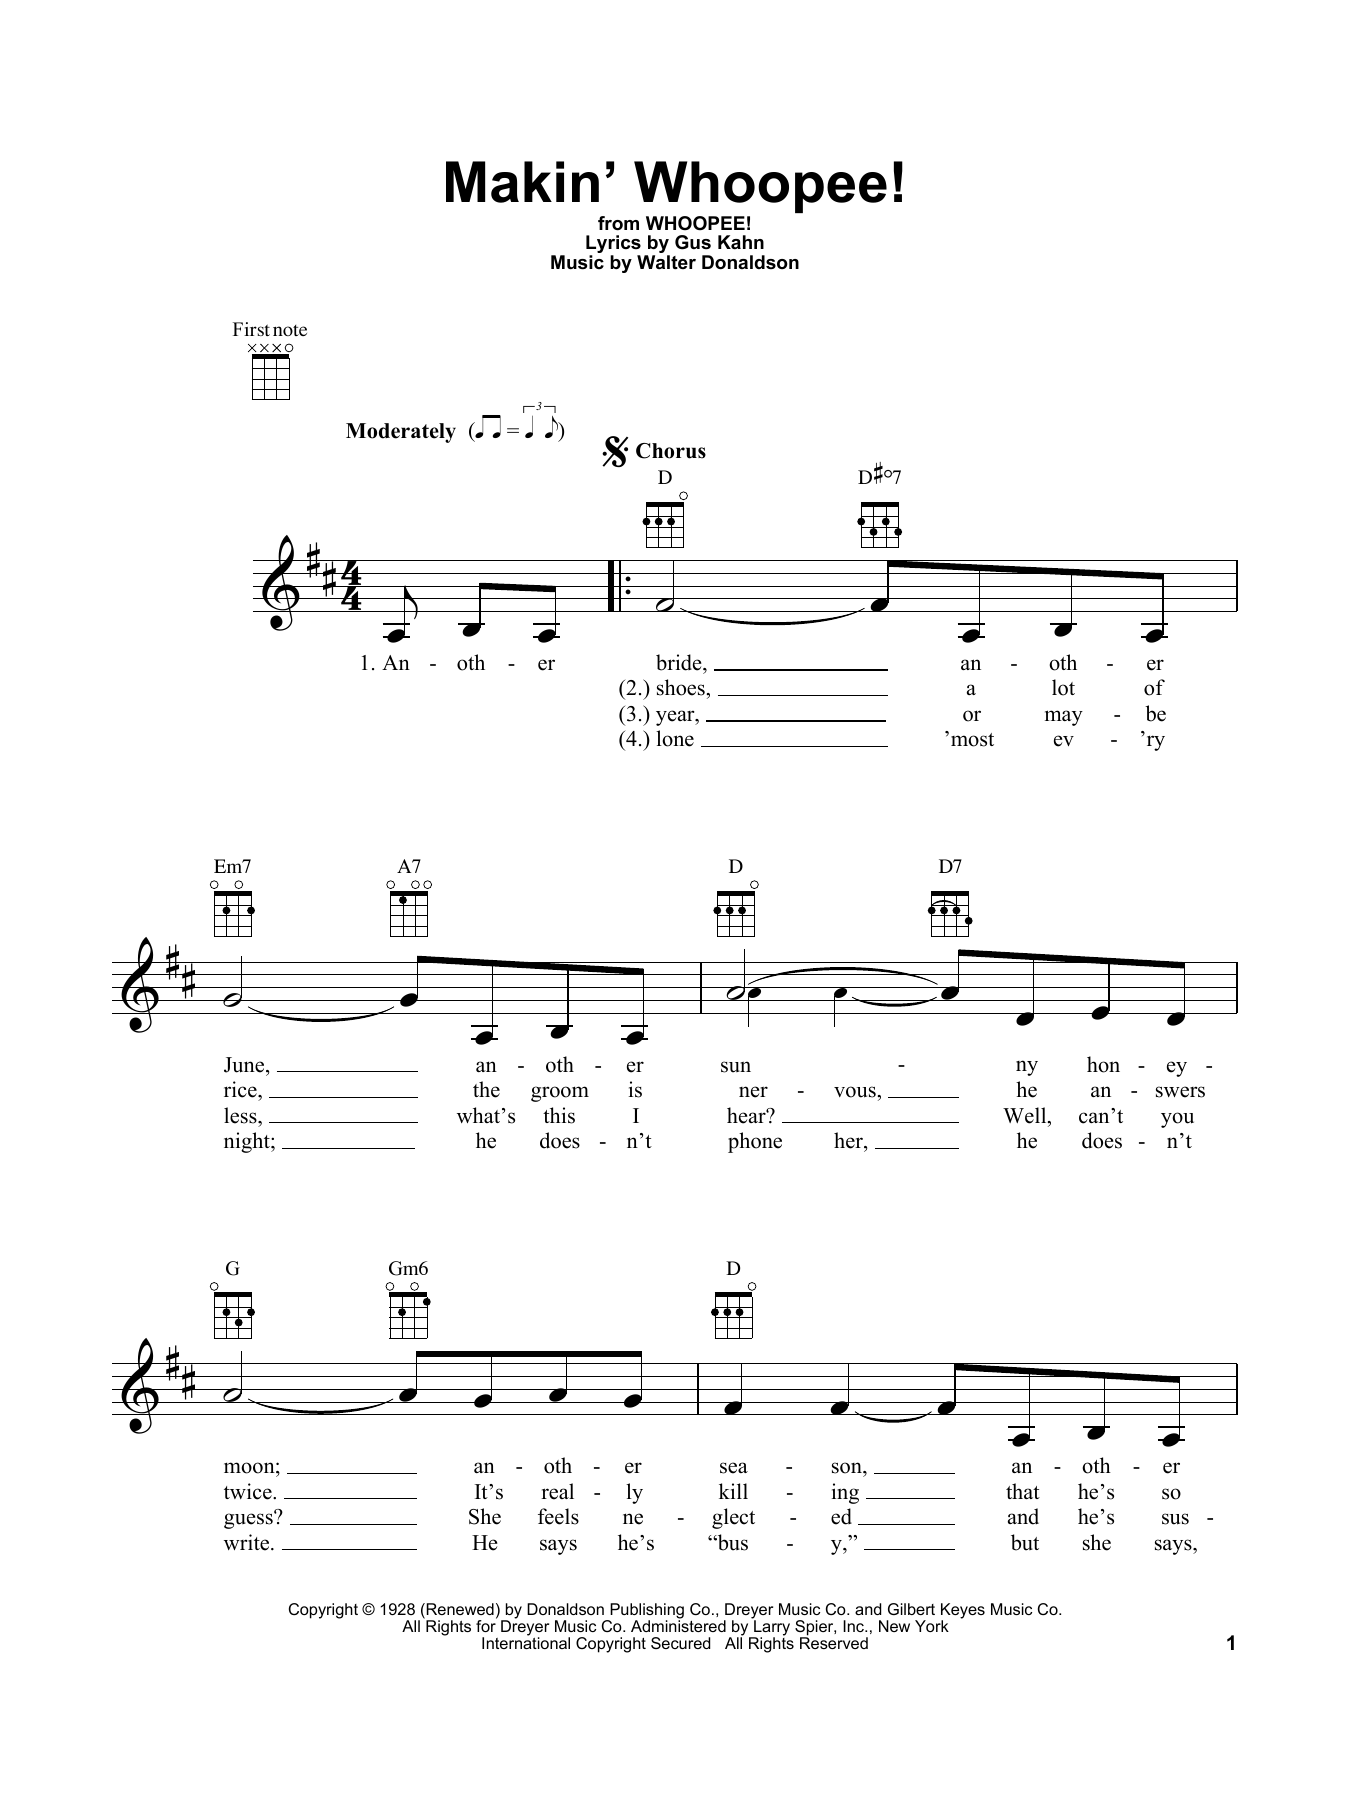 John Hicks Makin' Whoopee! Sheet Music Notes & Chords for Ukulele - Download or Print PDF